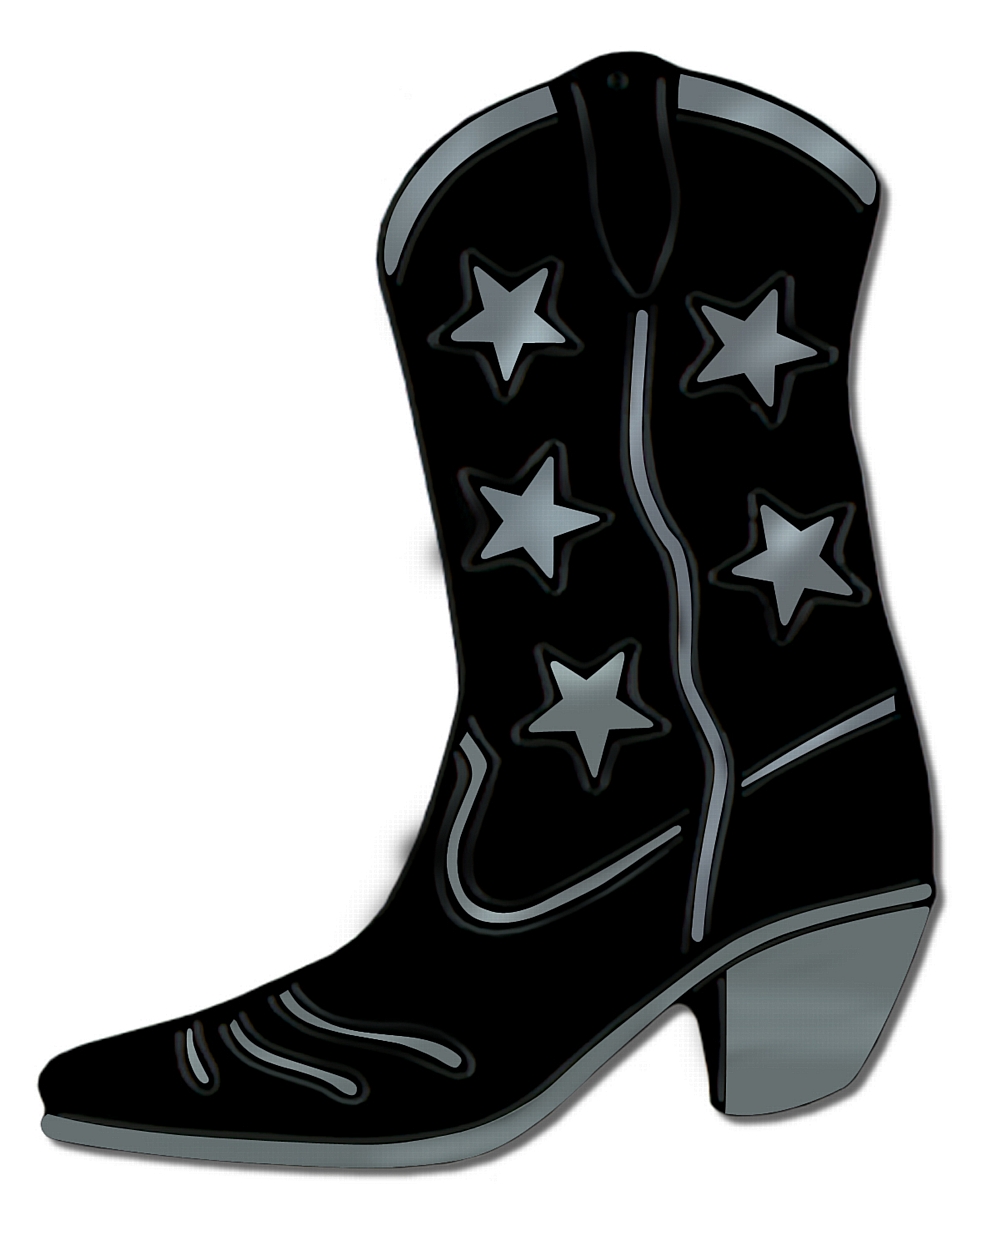 Black Foil Cowboy Boot Silhouette 16 Code Dcfcbbk Black Foil Design On